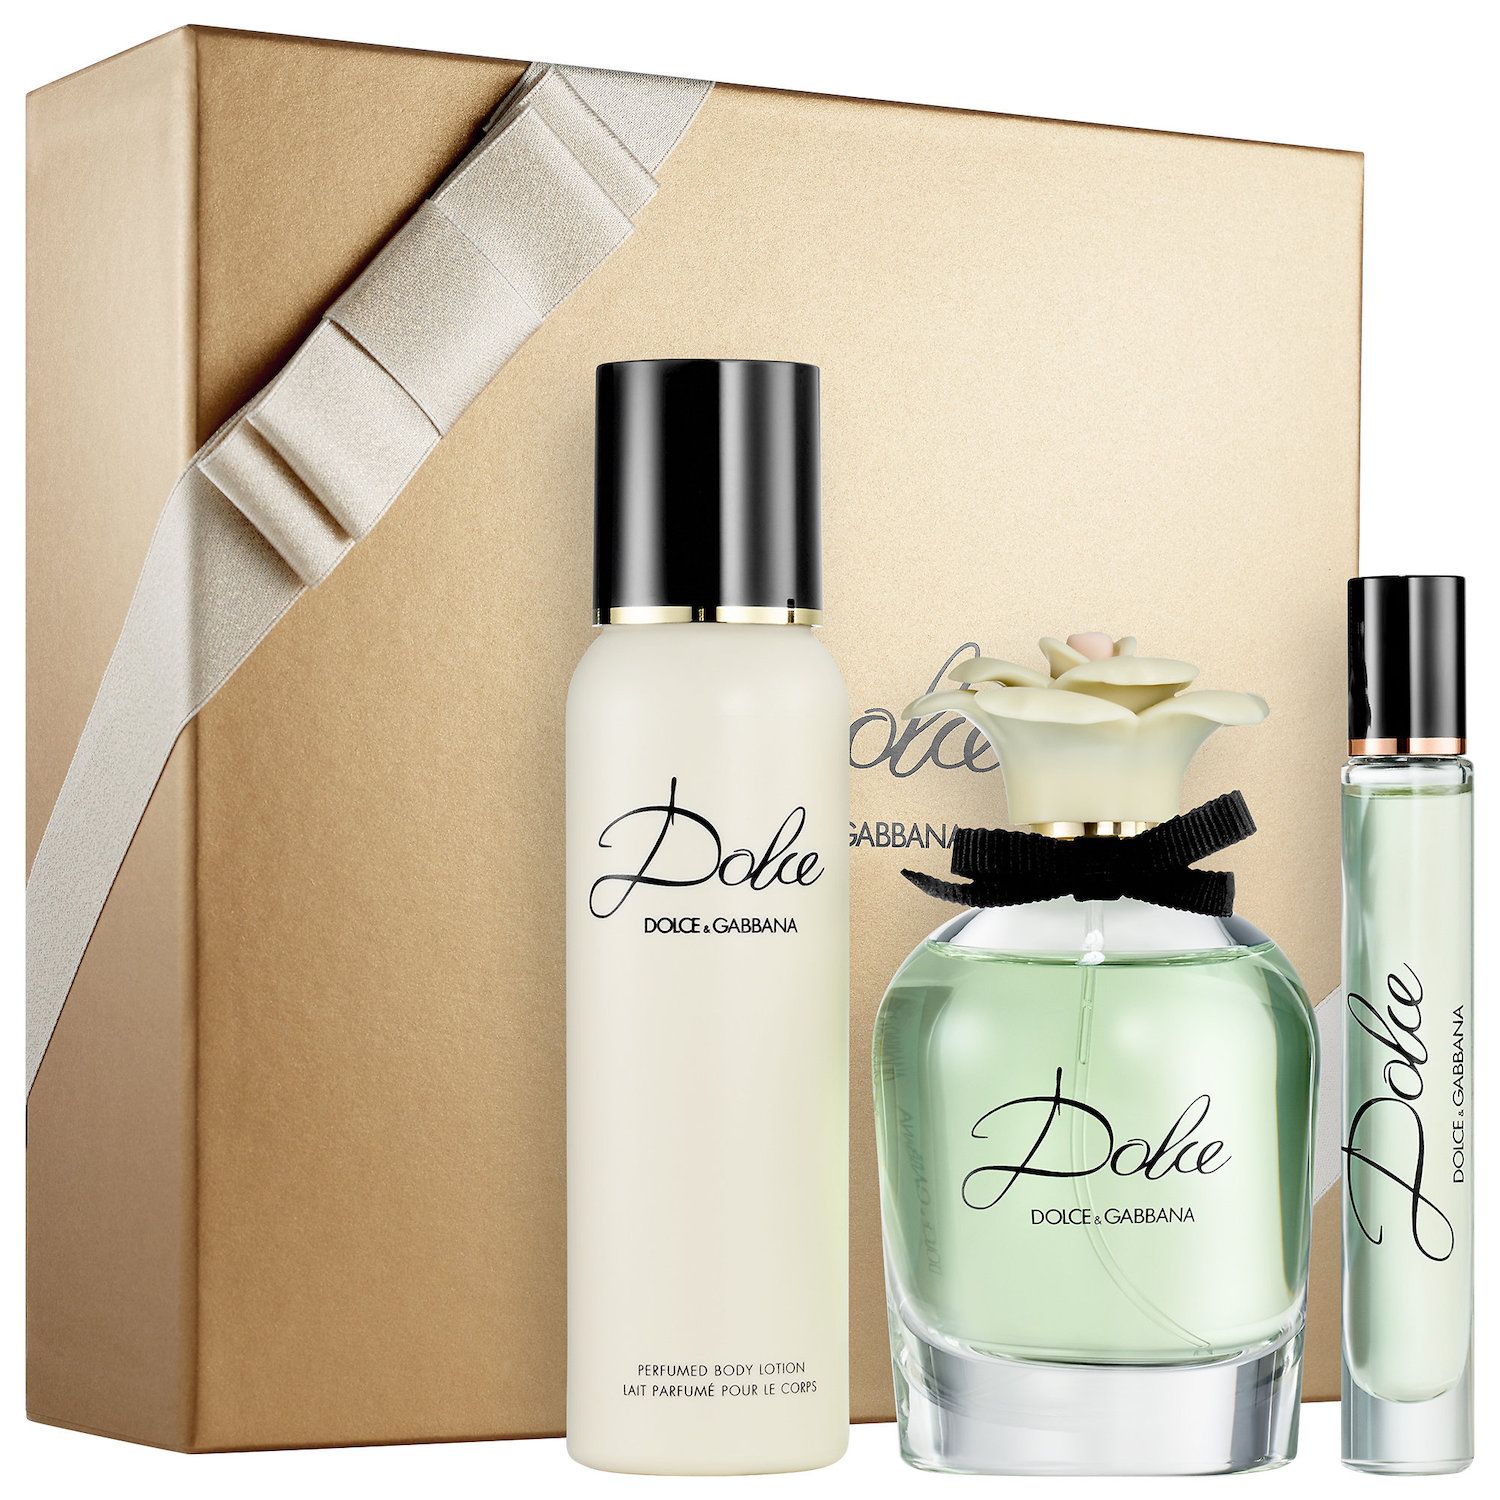 dolce and gabbana perfume gift sets